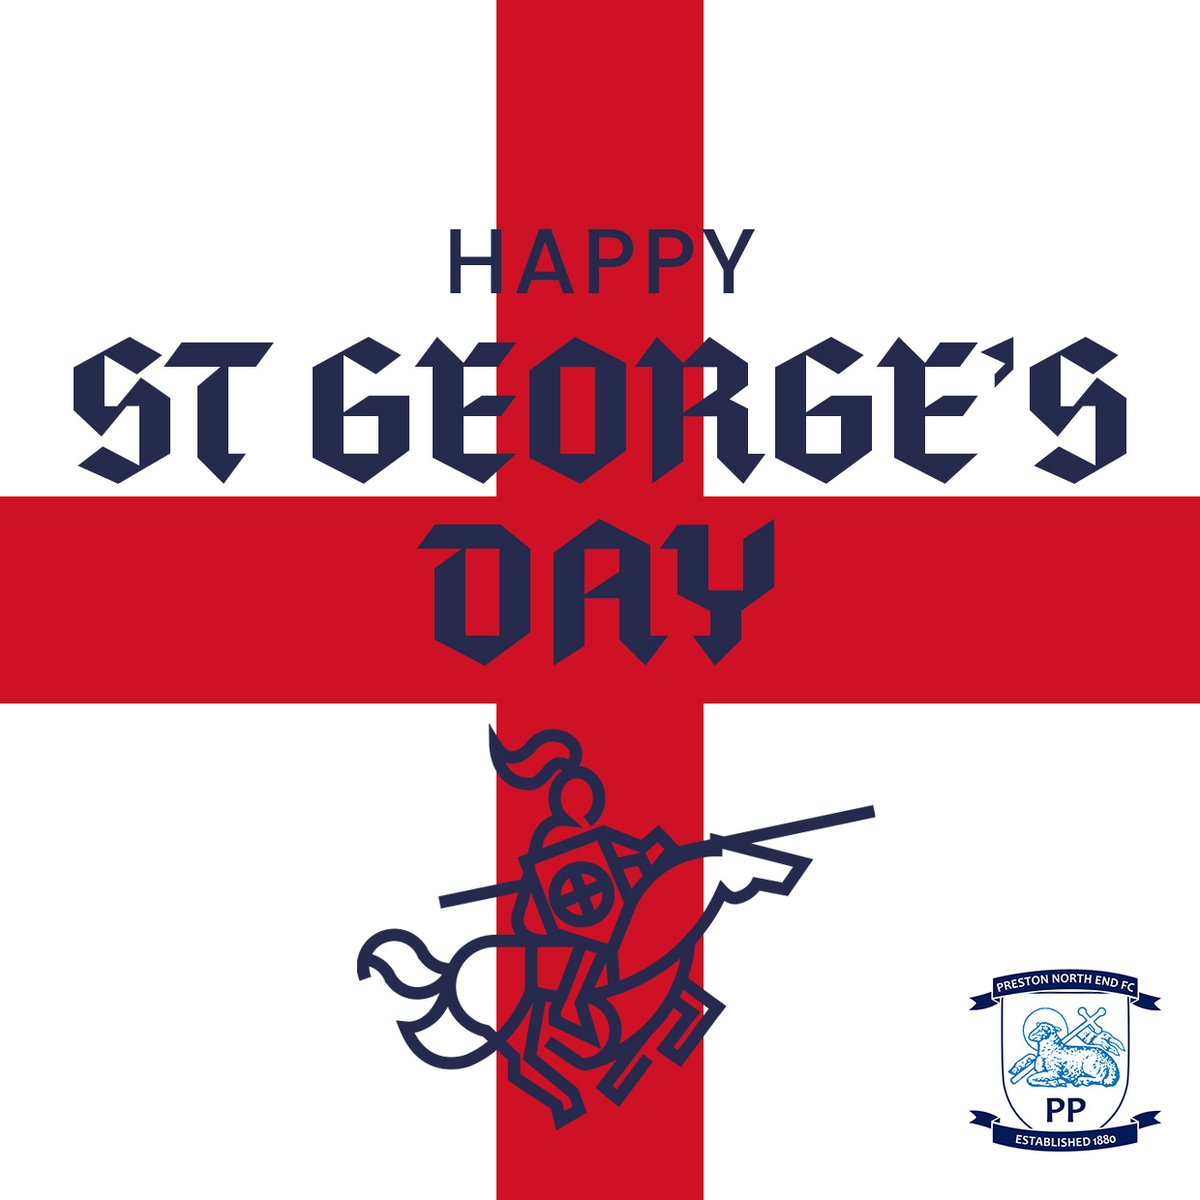 Happy St George's Day to everyone celebrating! 🏴󠁧󠁢󠁥󠁮󠁧󠁿 #pnefc